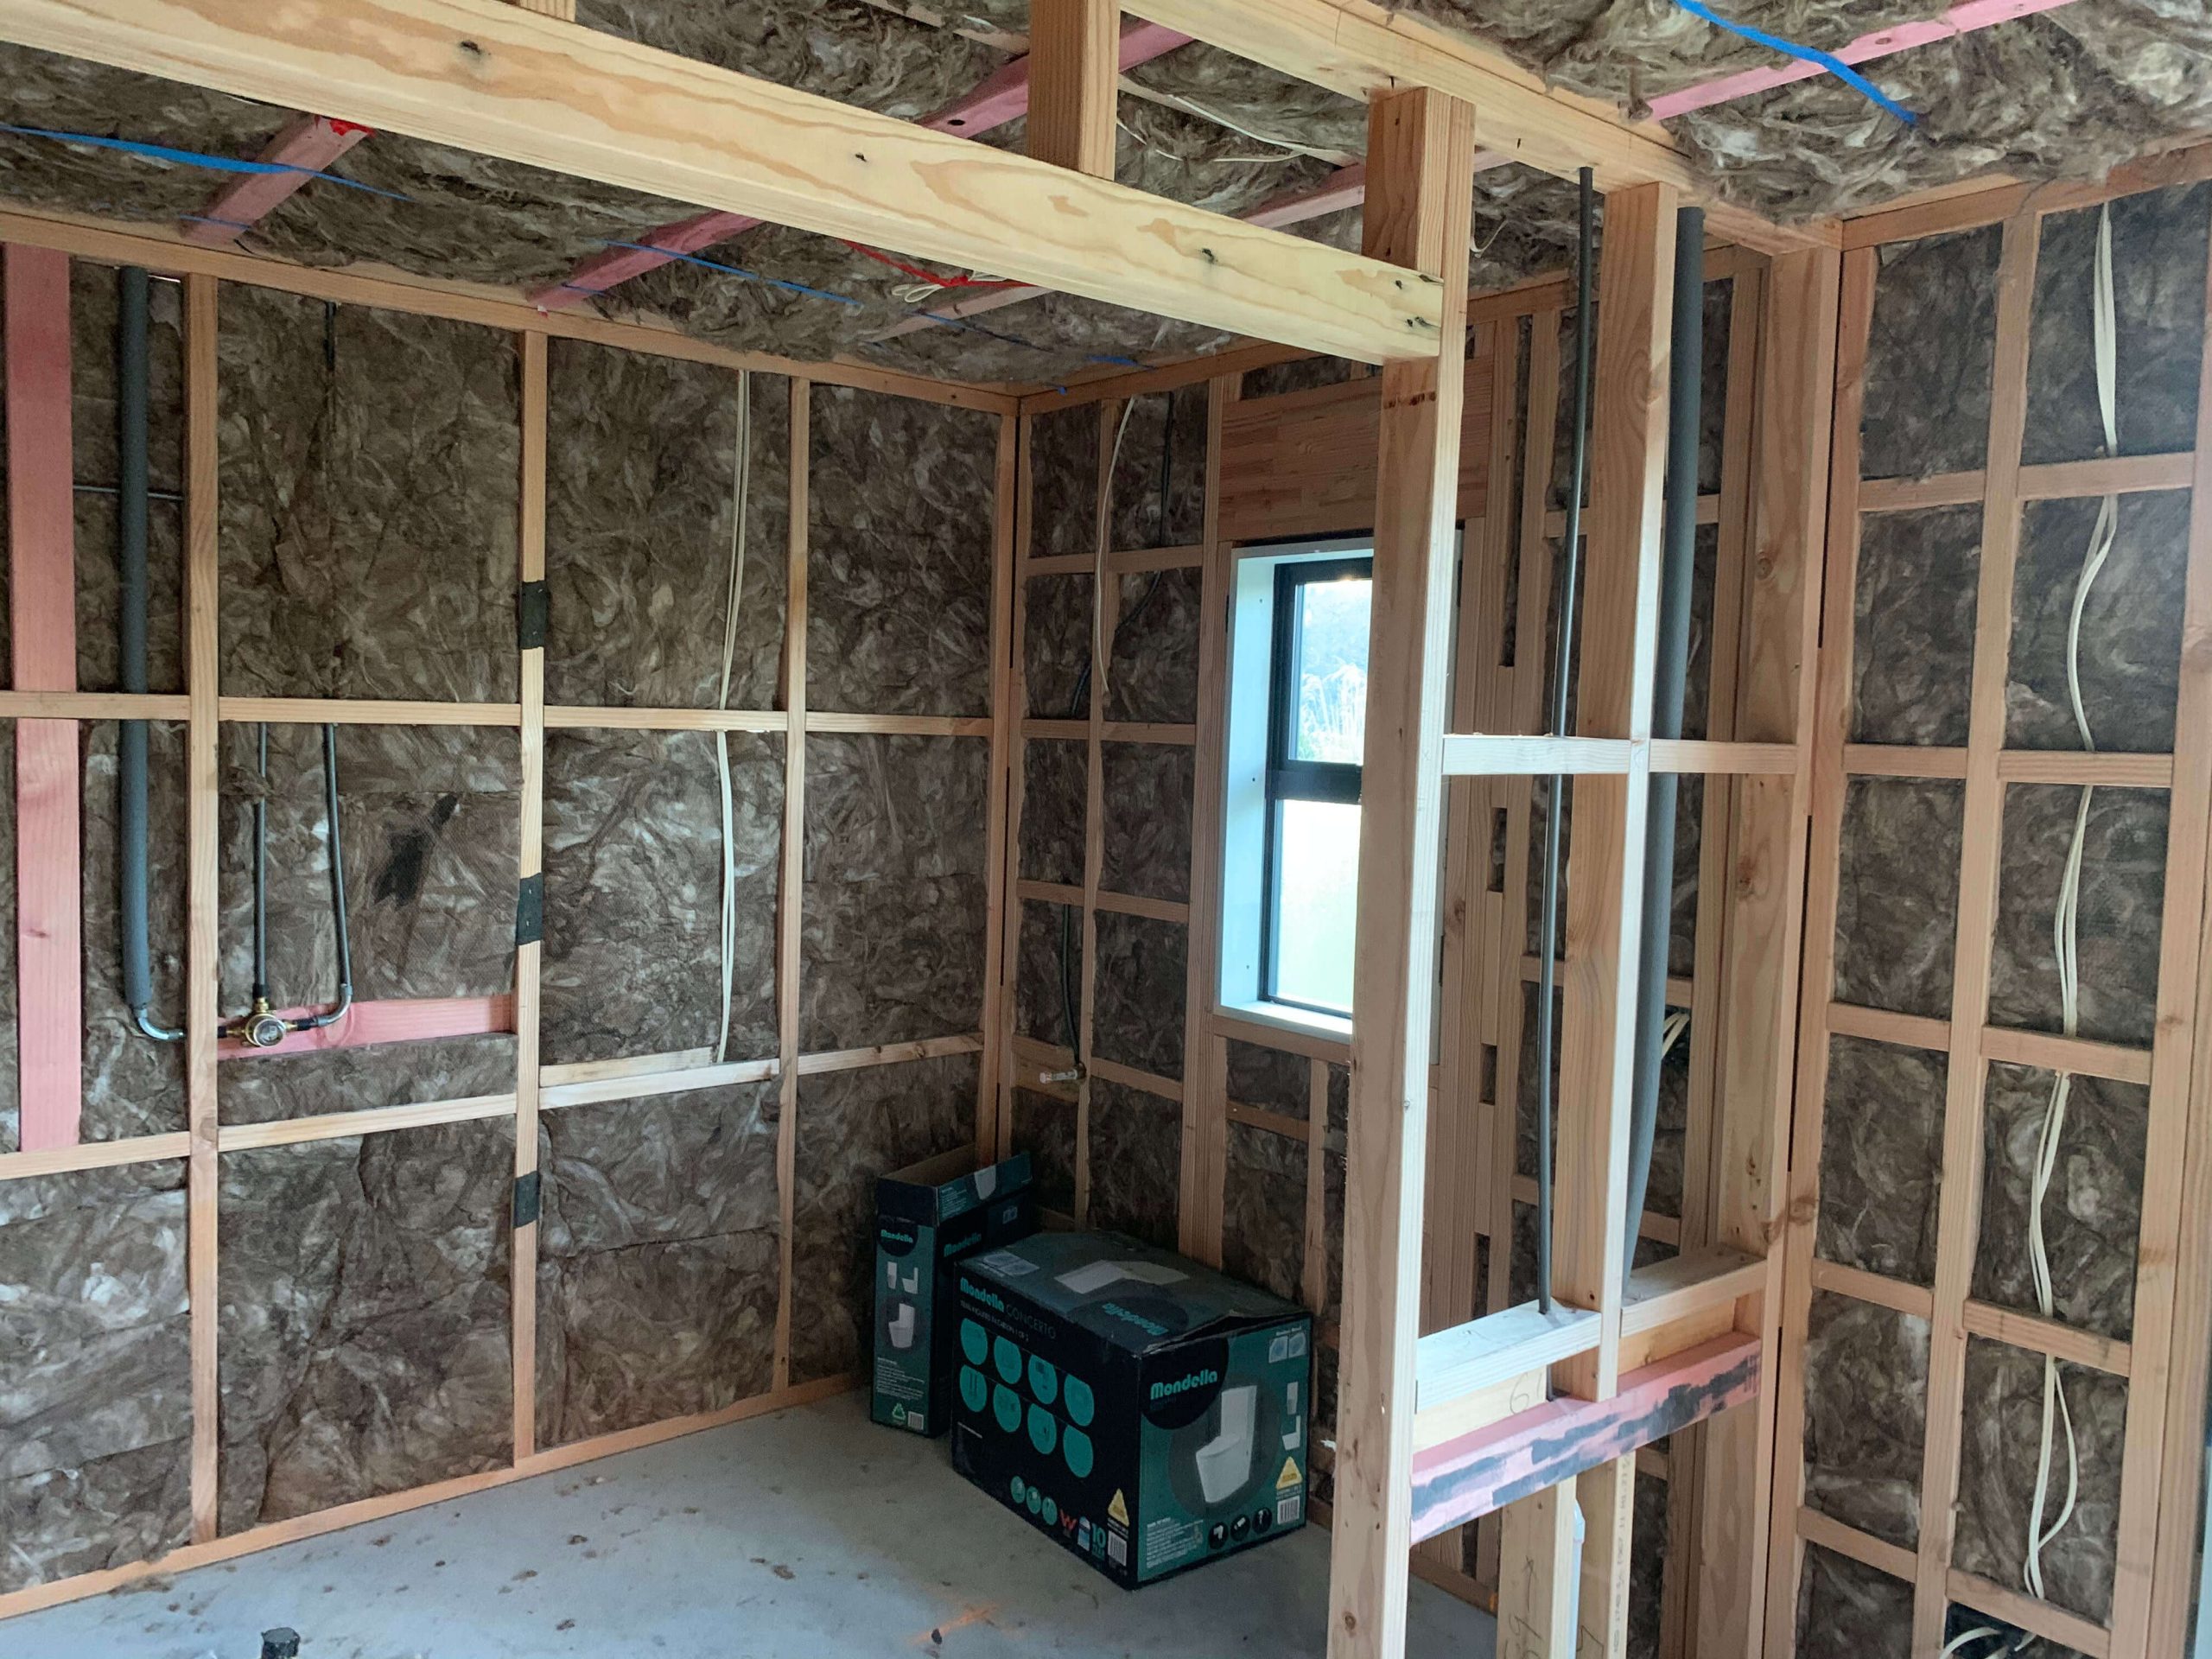 New build insulation walls